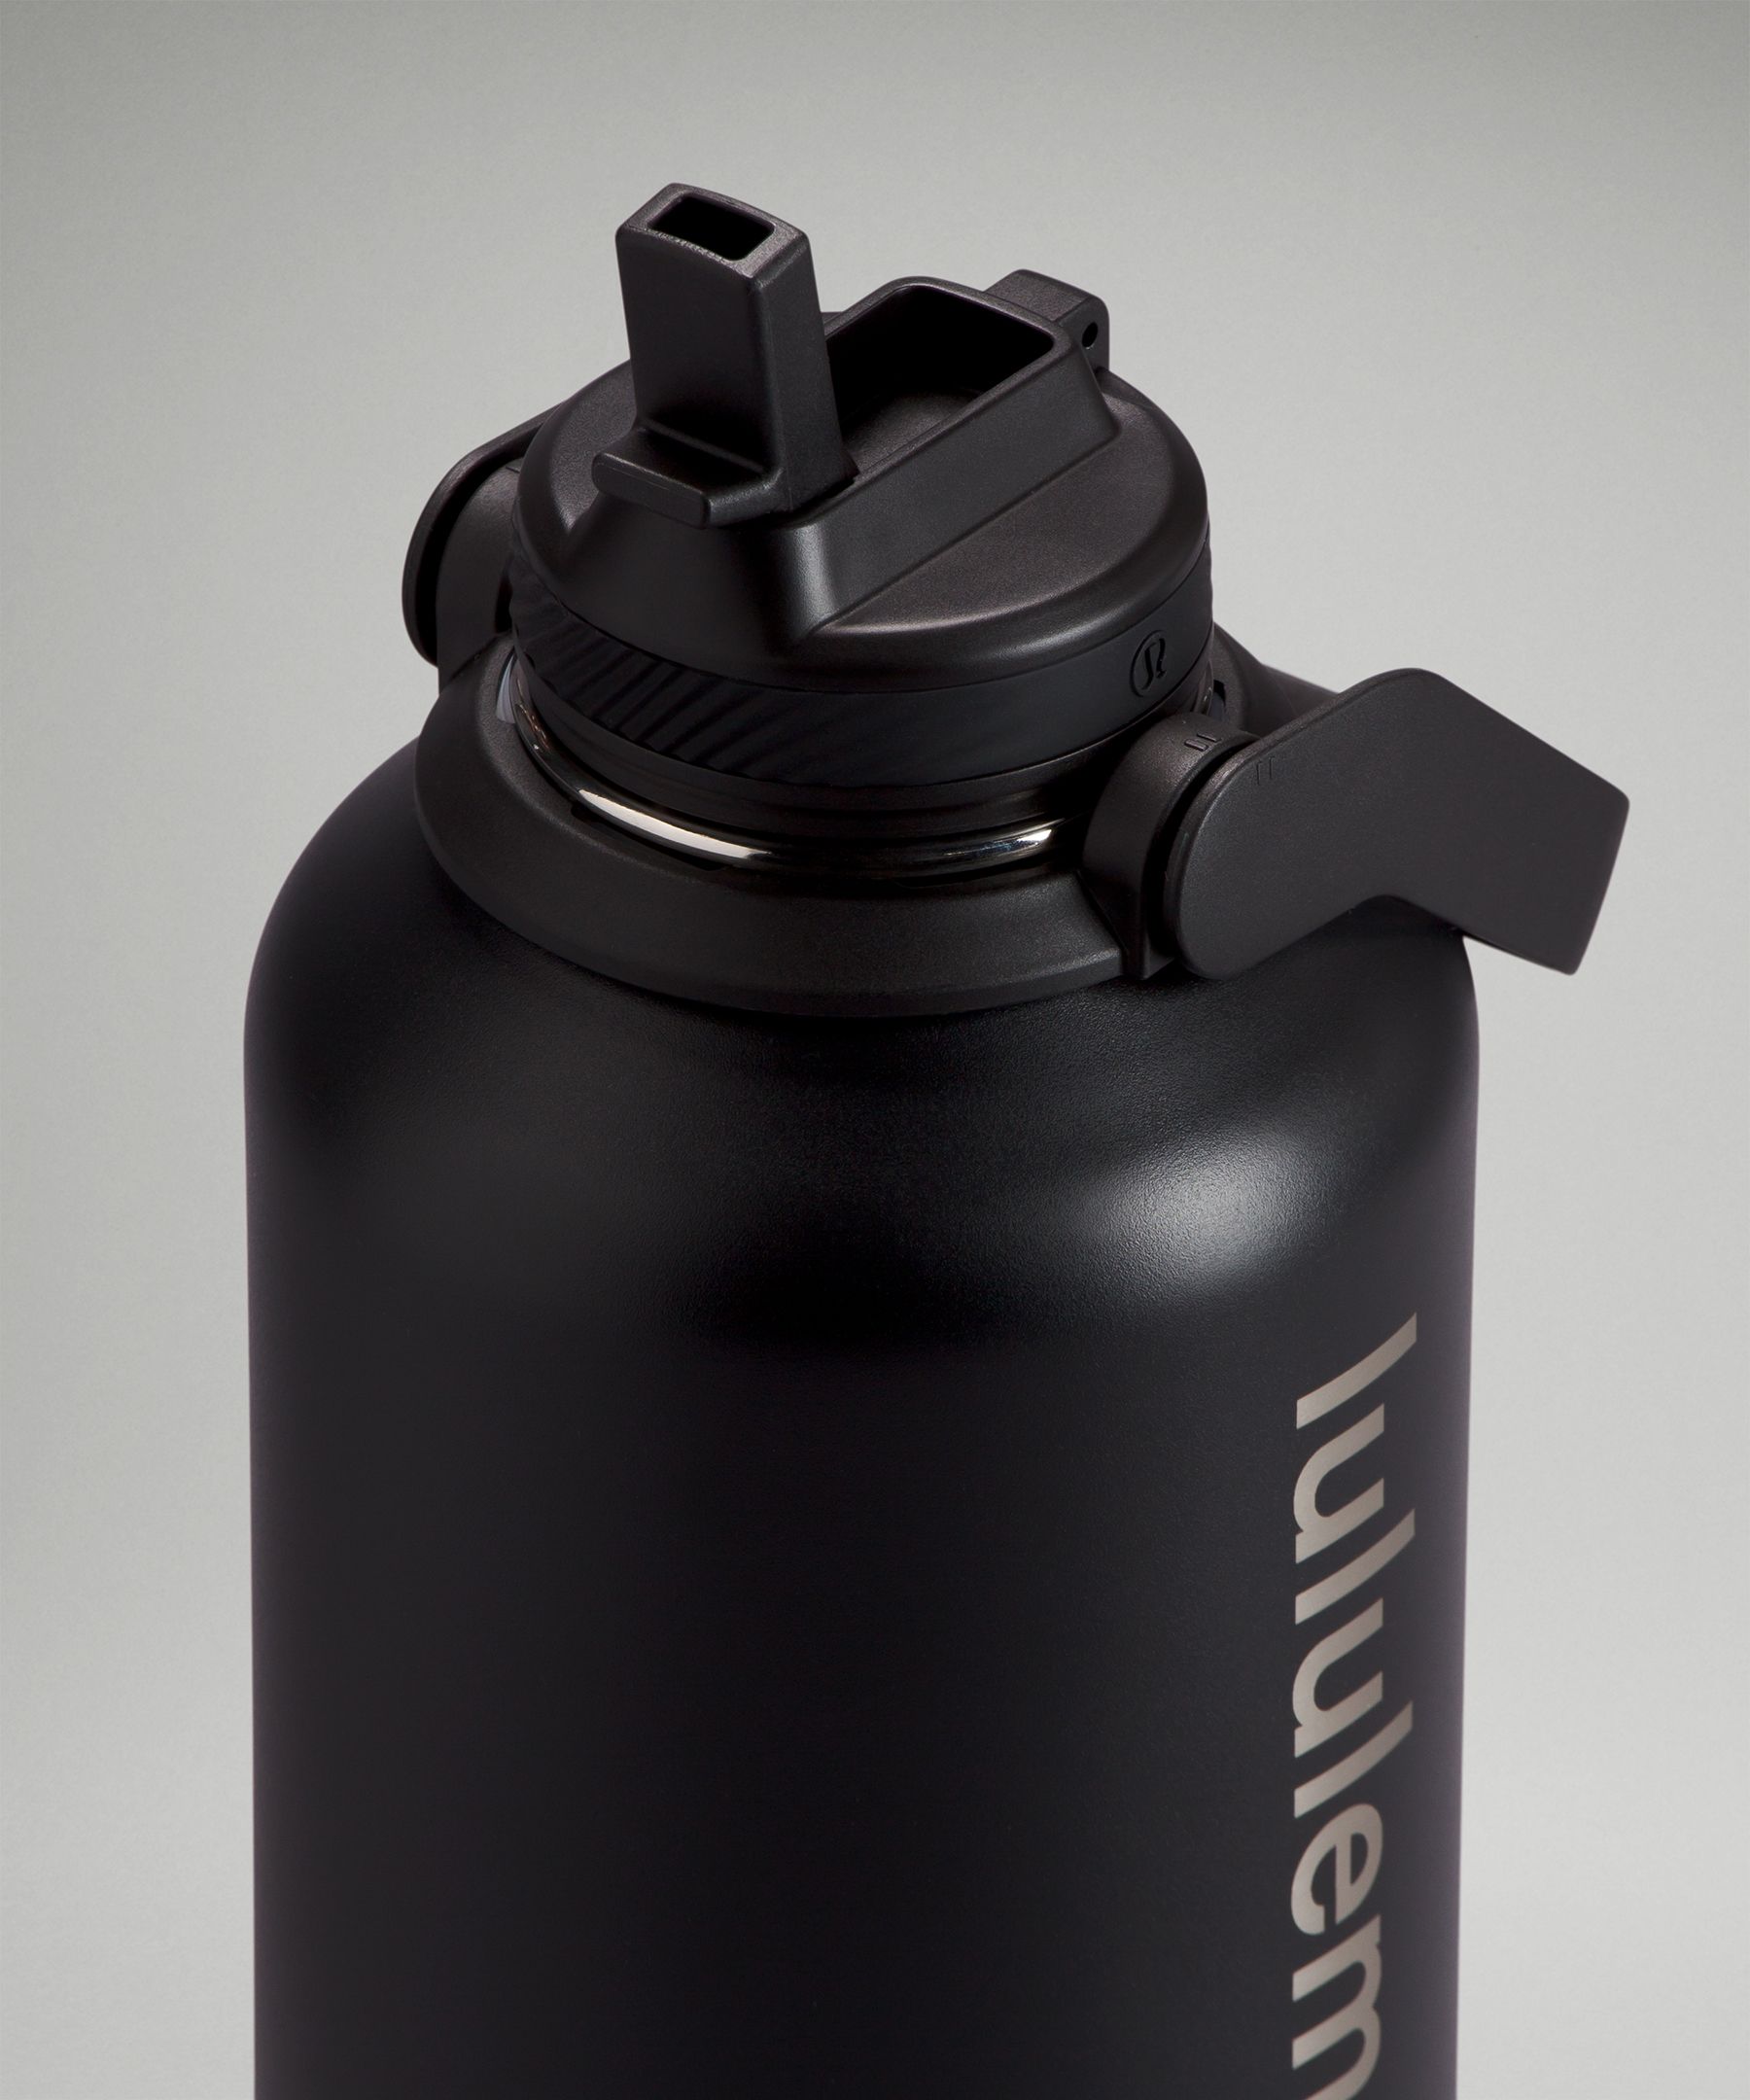 Back to Life Sport Bottle 64oz, Unisex Water Bottles